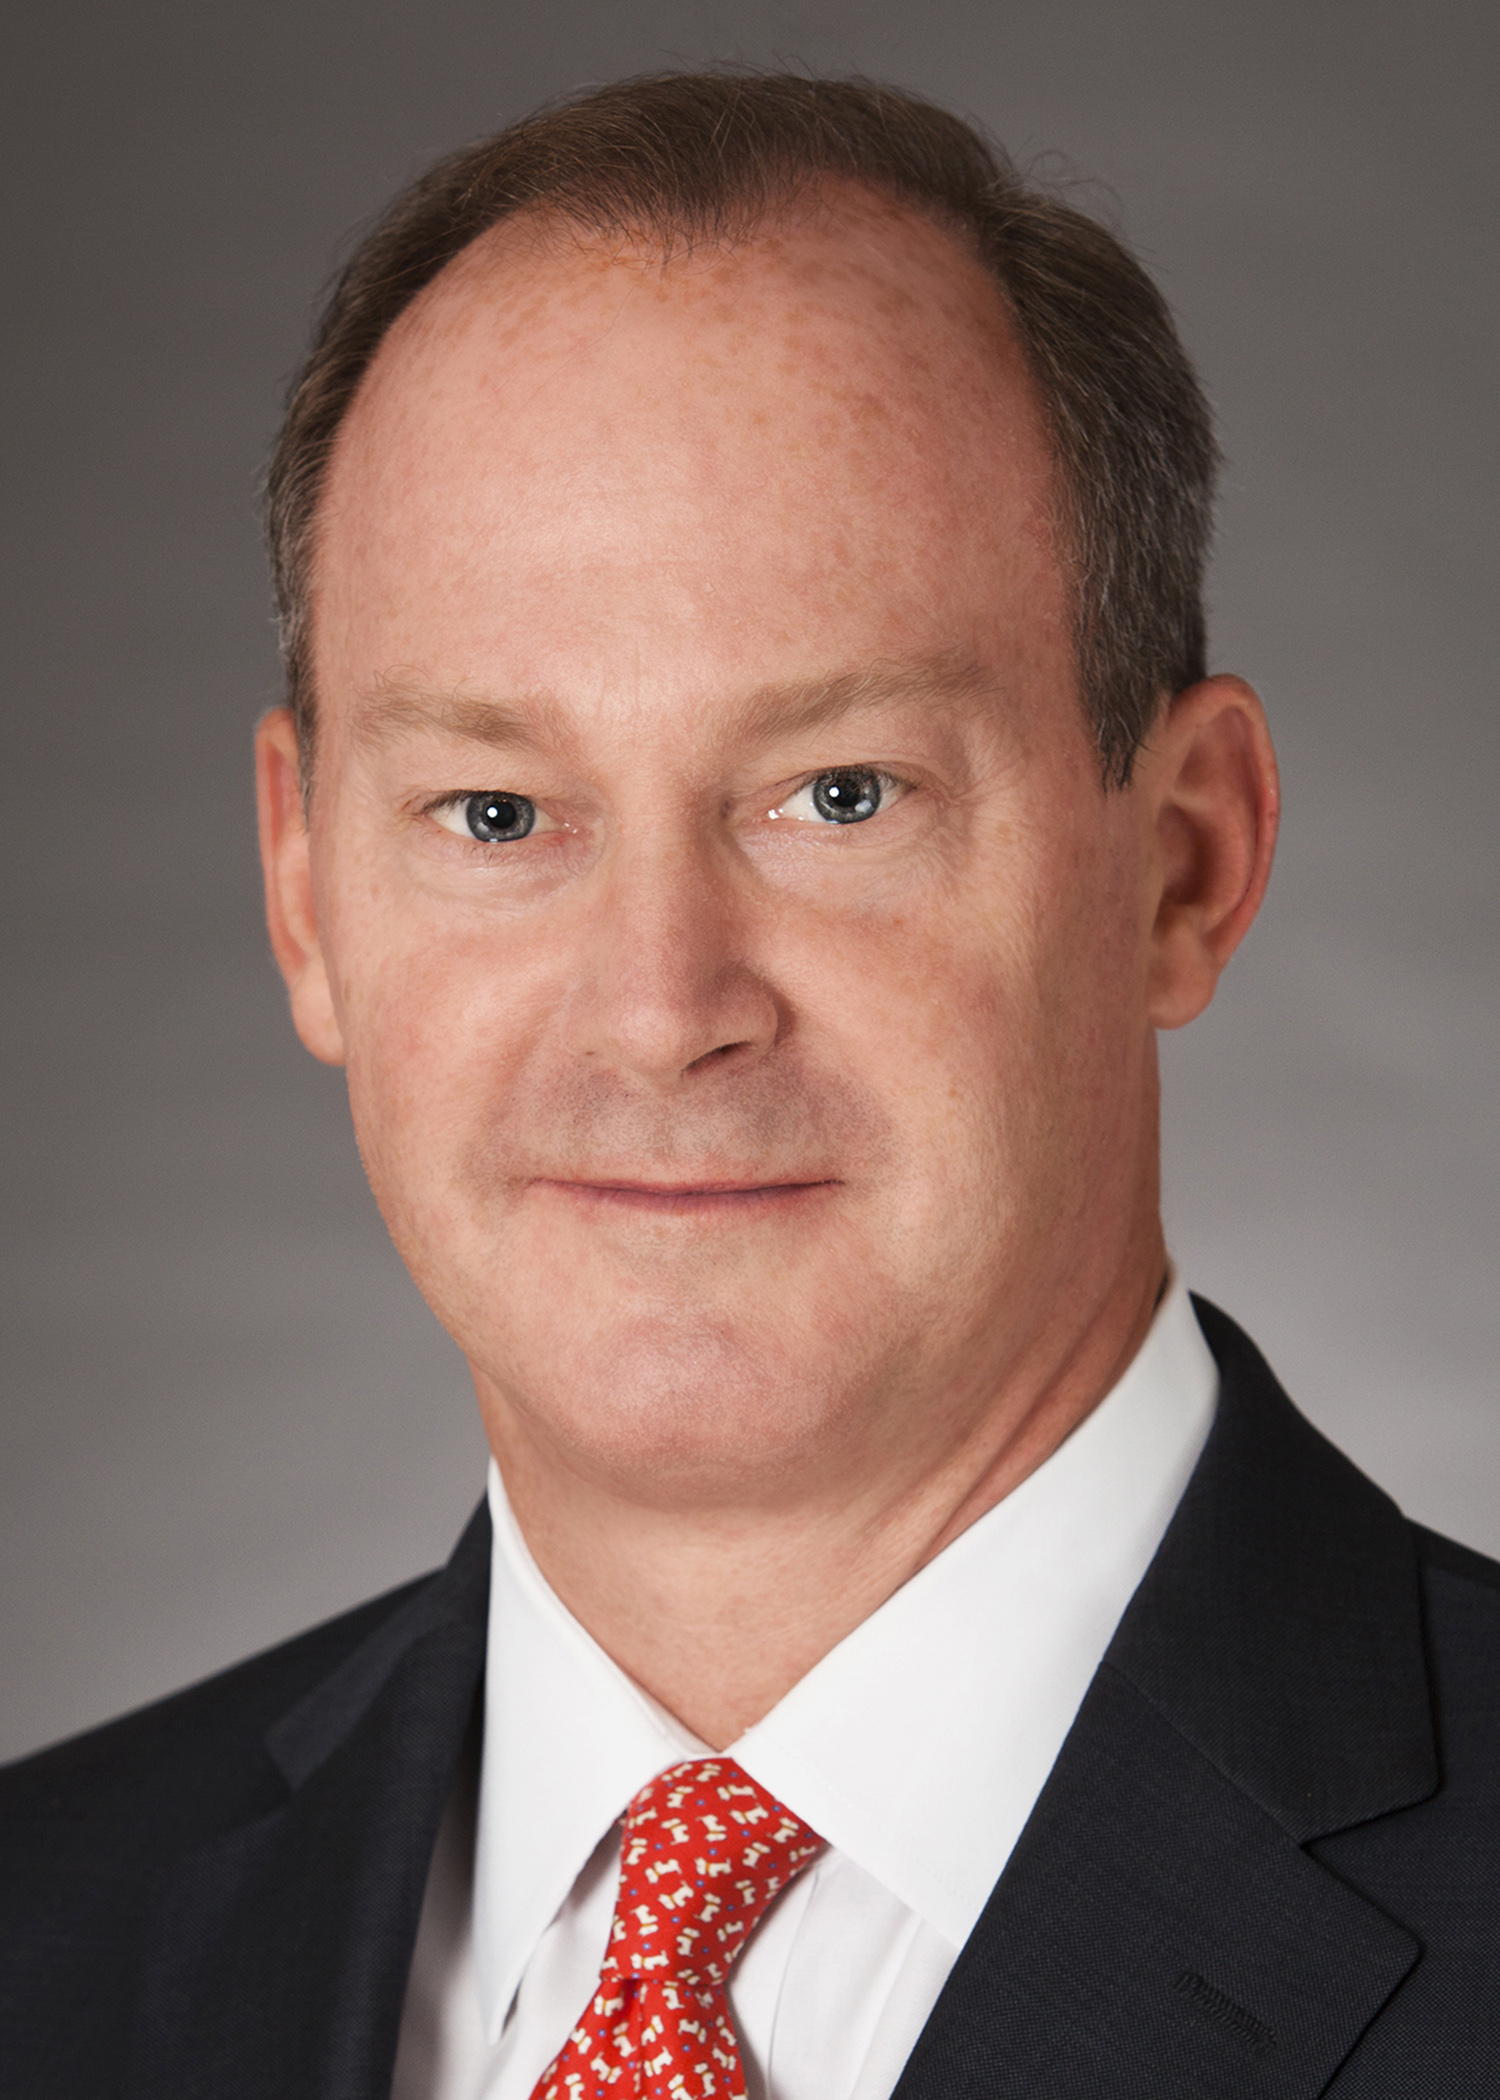 Robert Bridges joined Wilmington Trust as a senior investment advisor in the New York office.